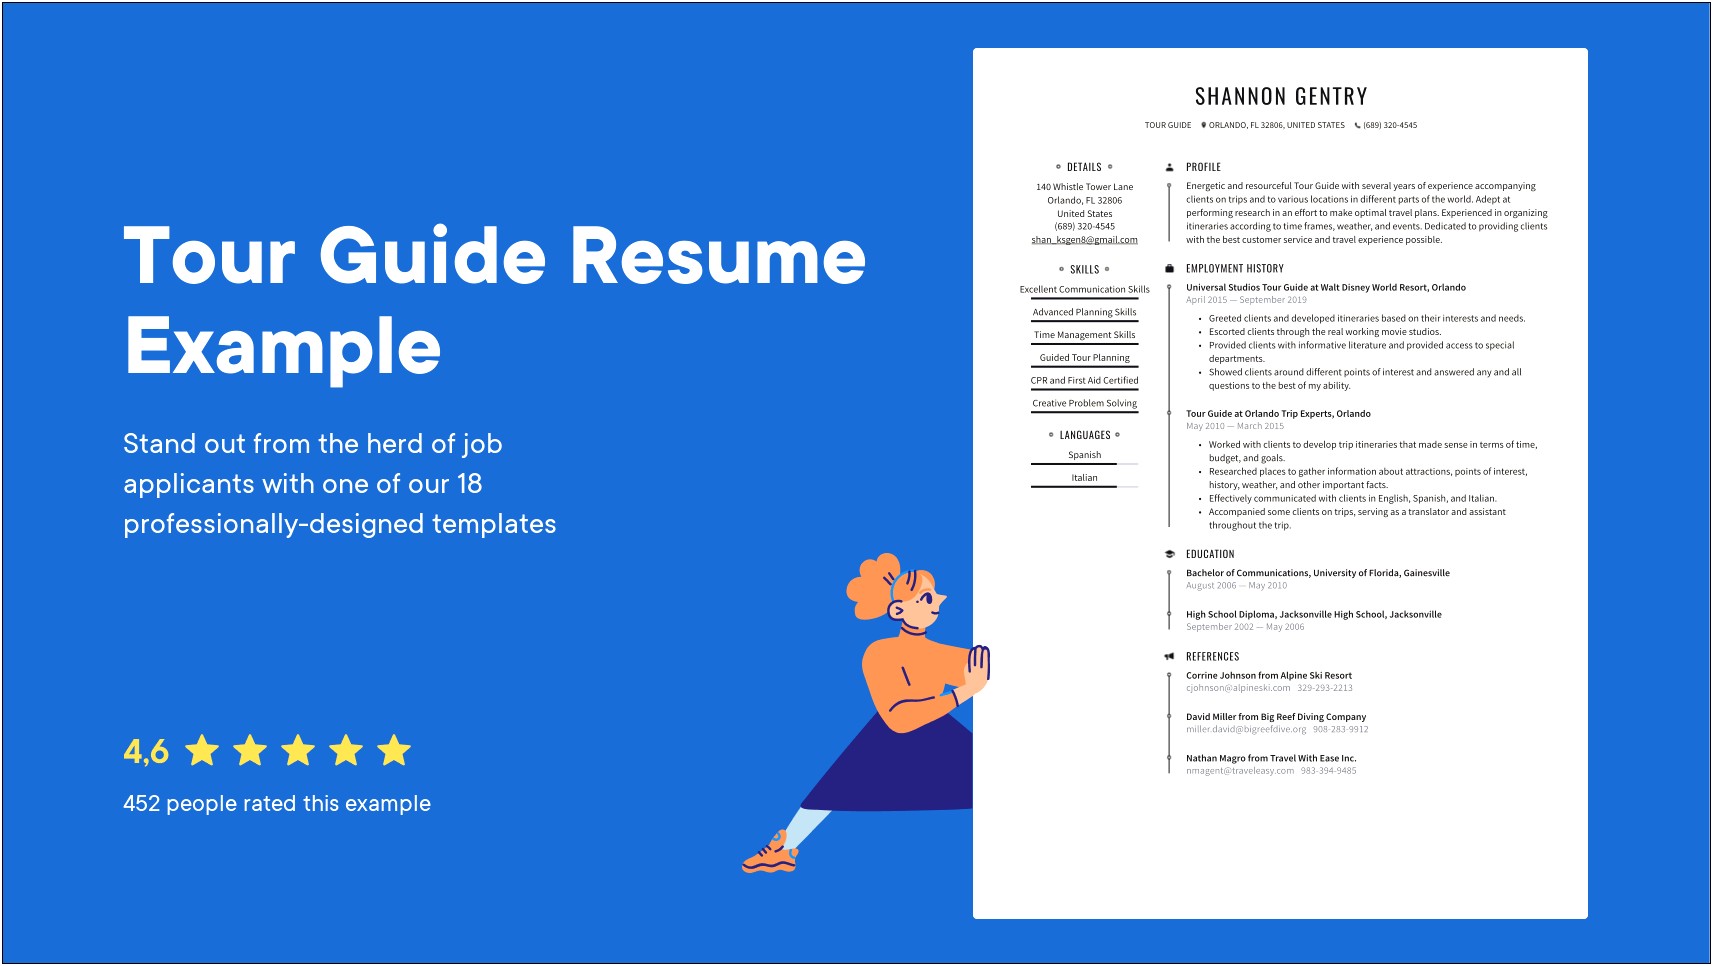 Job Descriptions On Resume For Tour Guide